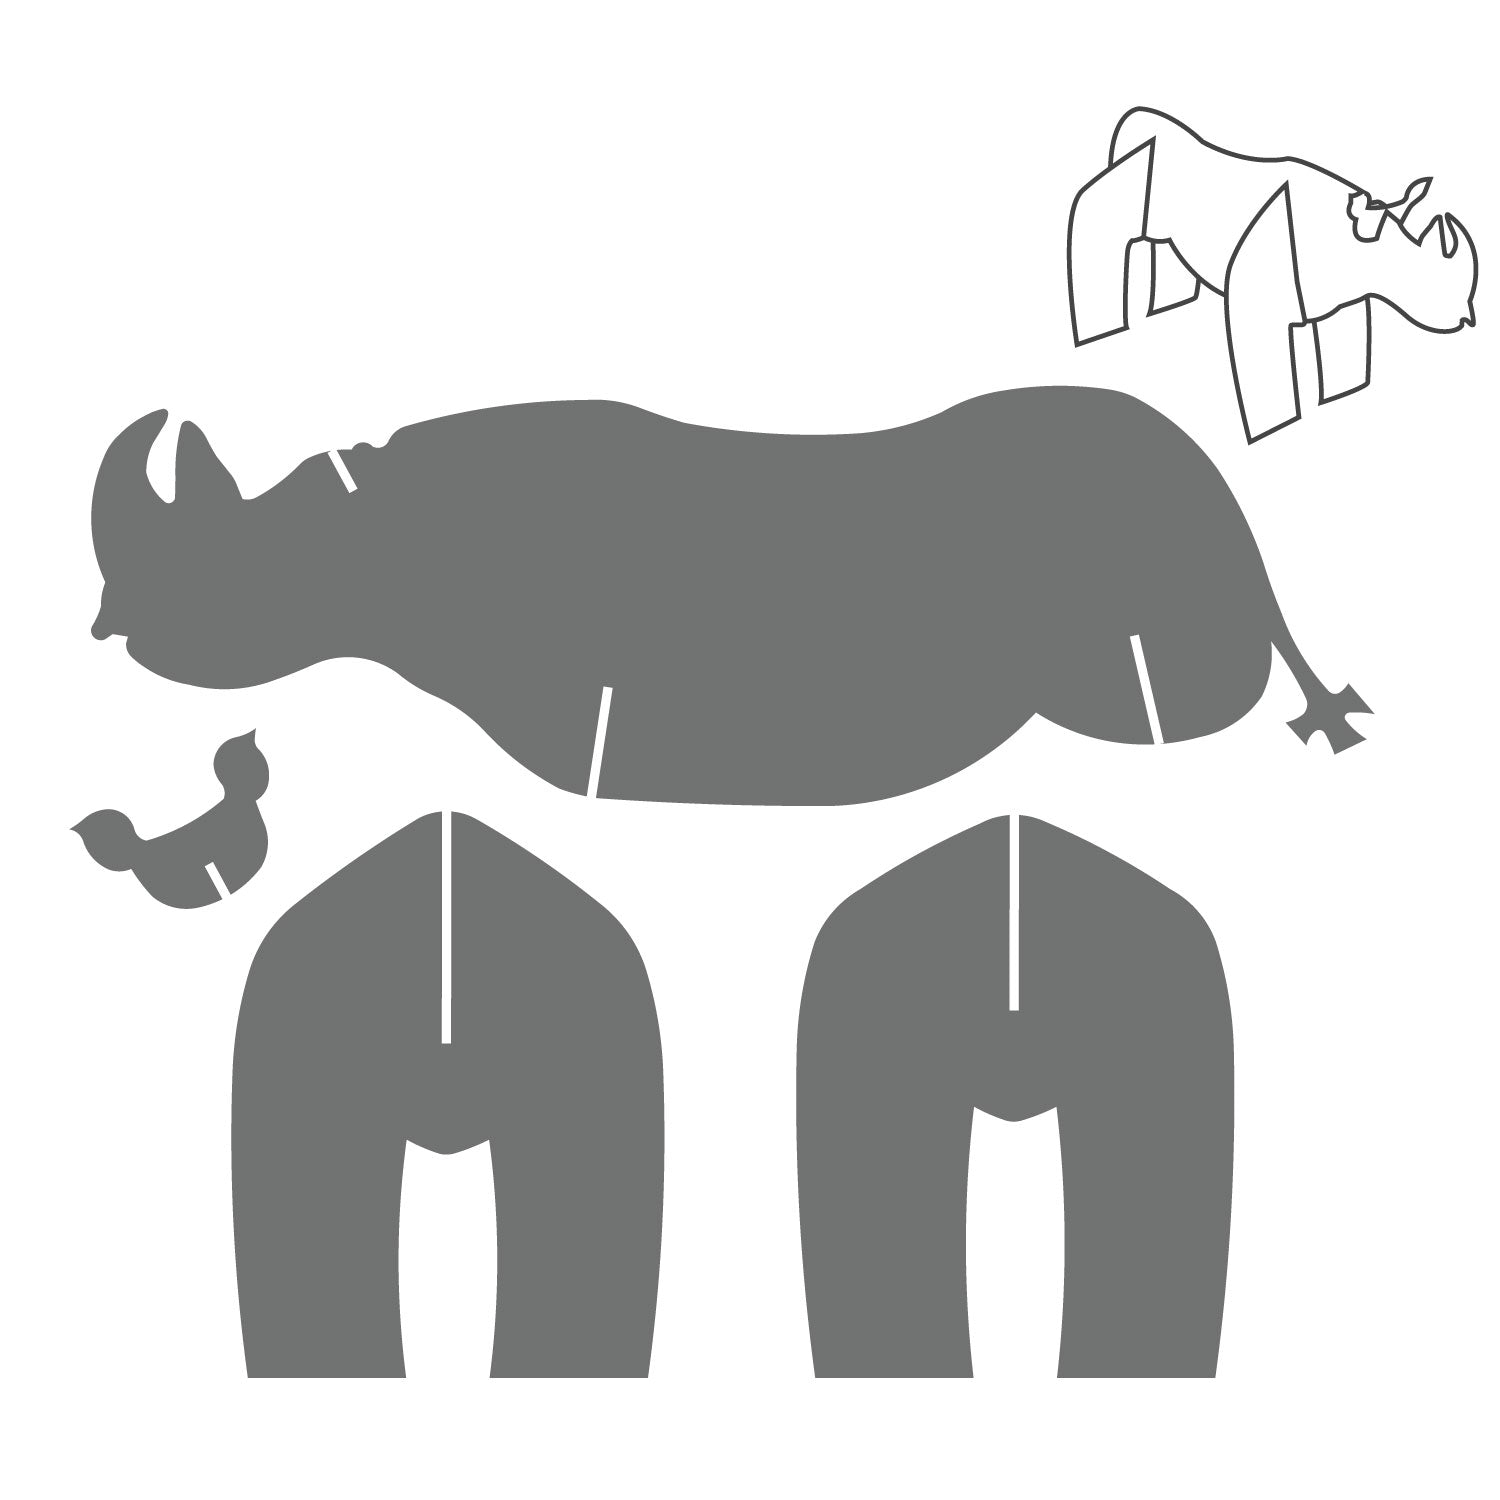 Rhinoceros 3D 7.30.23163.13001 free download